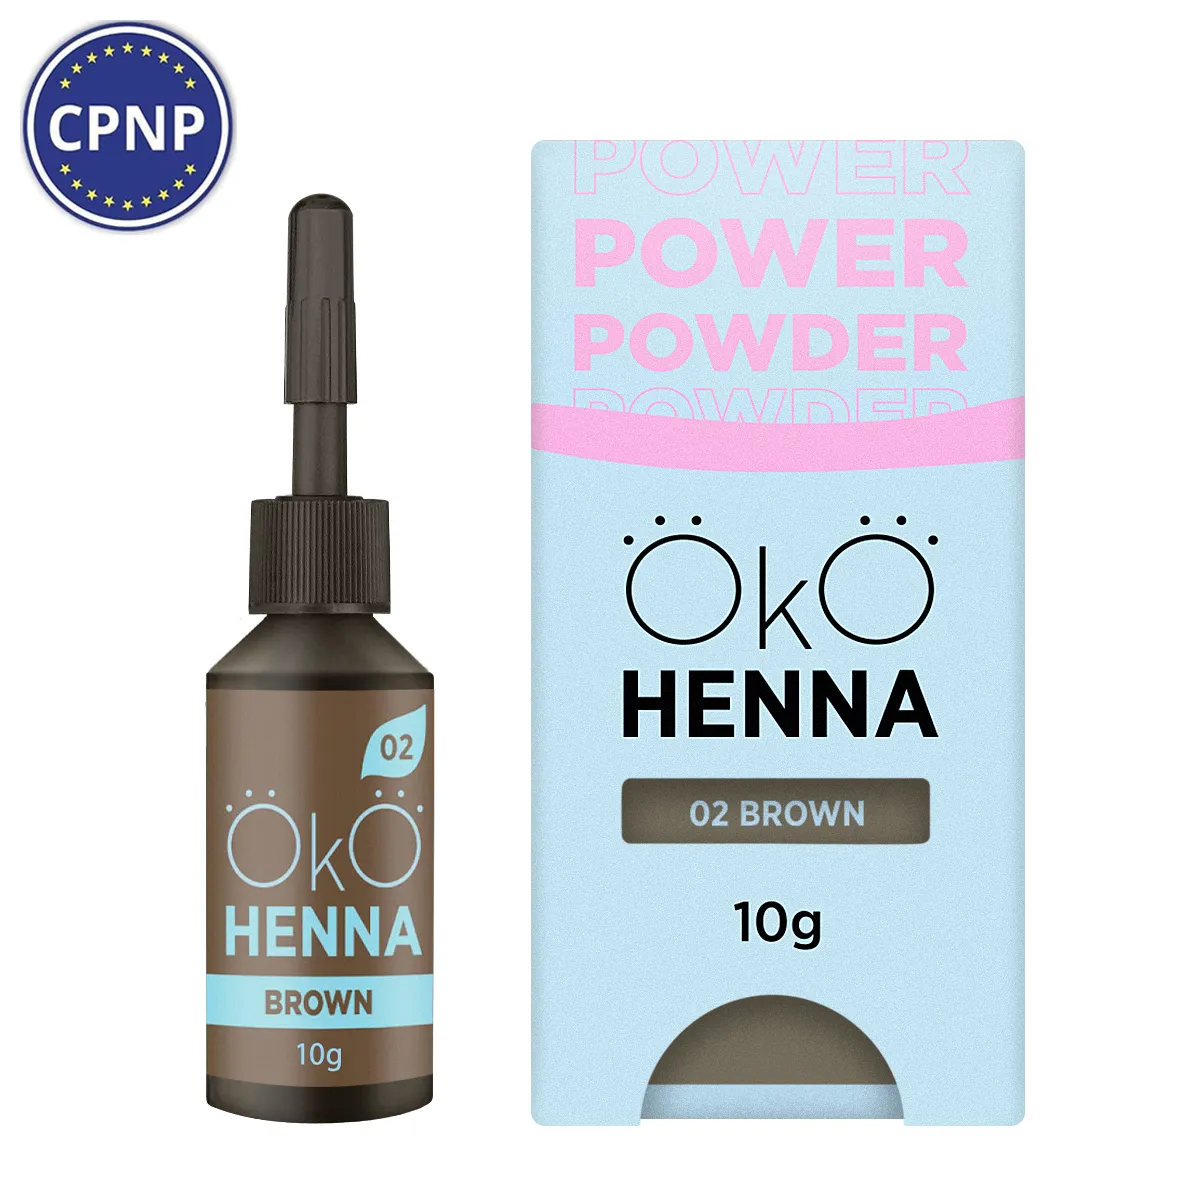 OKO Henna For Brows Power Powder, 02 Brown, 10 g OKOhenna02